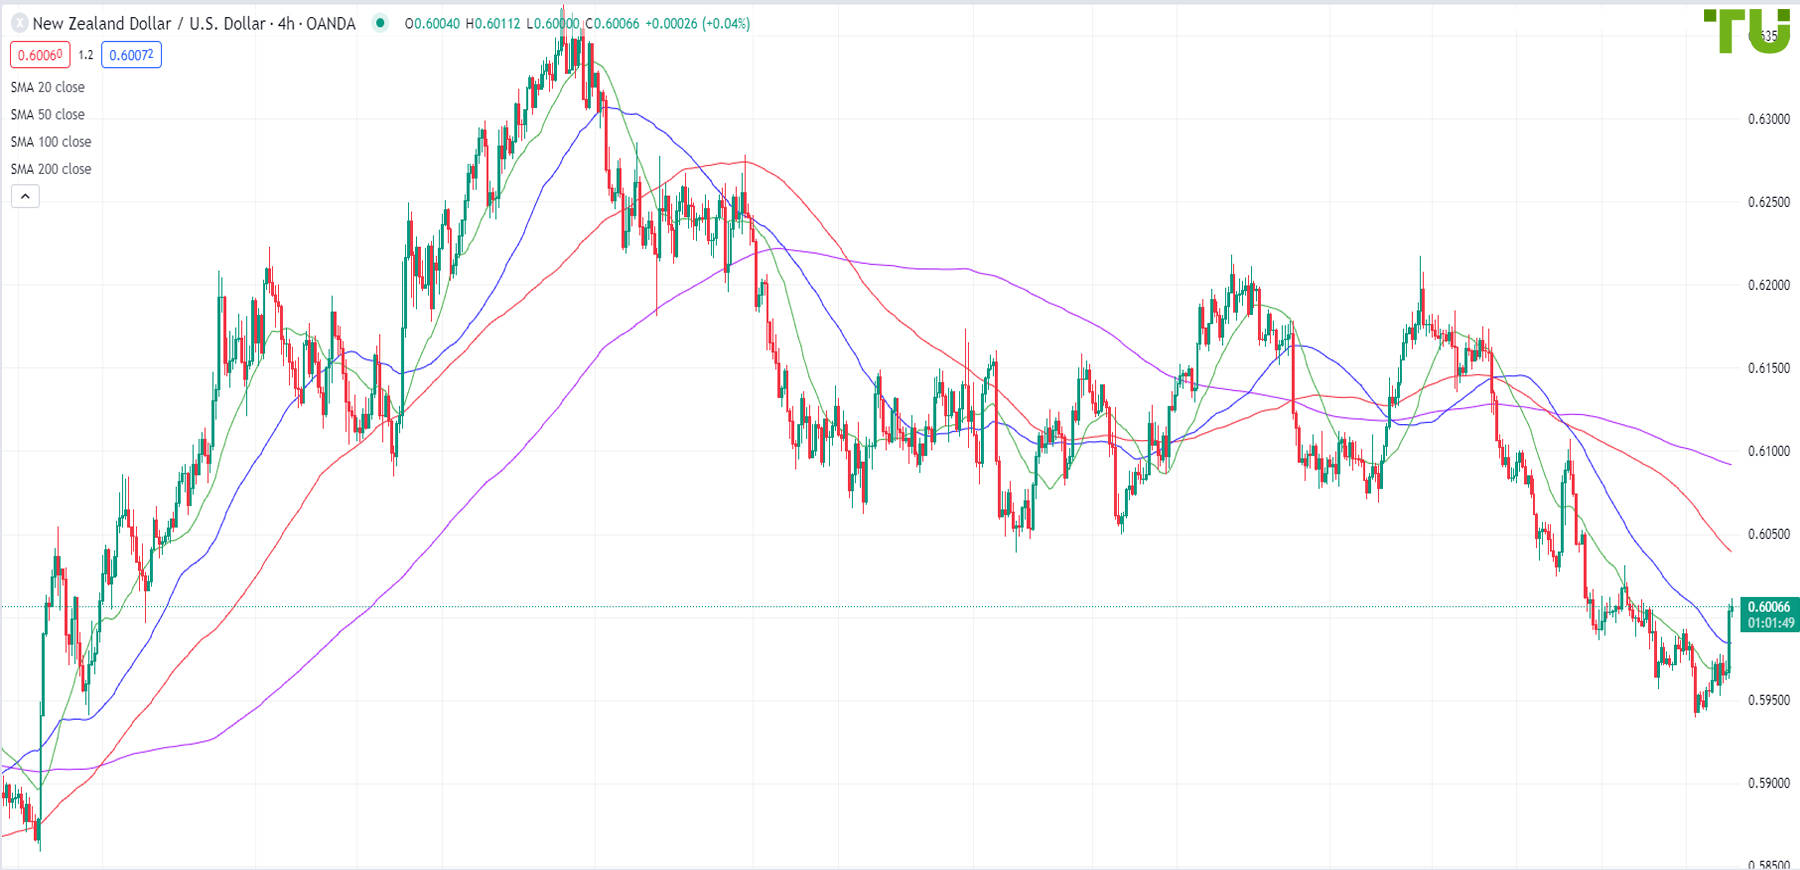 Kiwi/dollar moves higher